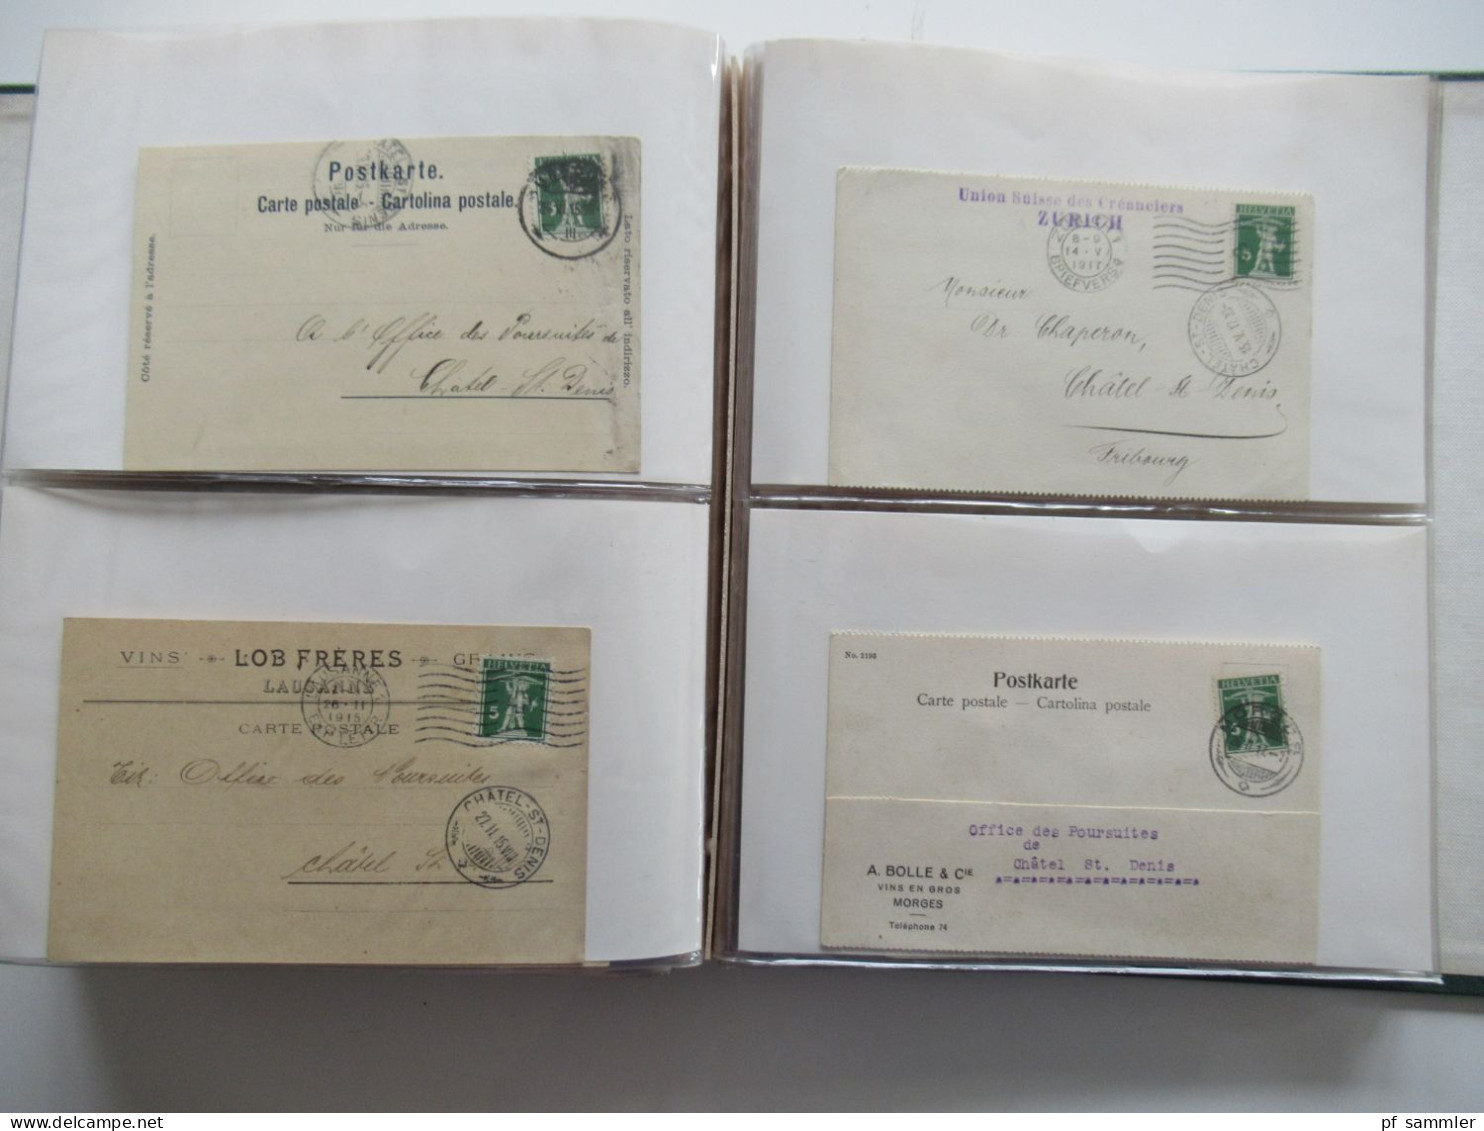 1888 - 1920er Belege Posten Schweiz Firmen PK insgesamt 120 Stück!! Bedruckte Karten / dekorative Karten/ Fundgrube!!